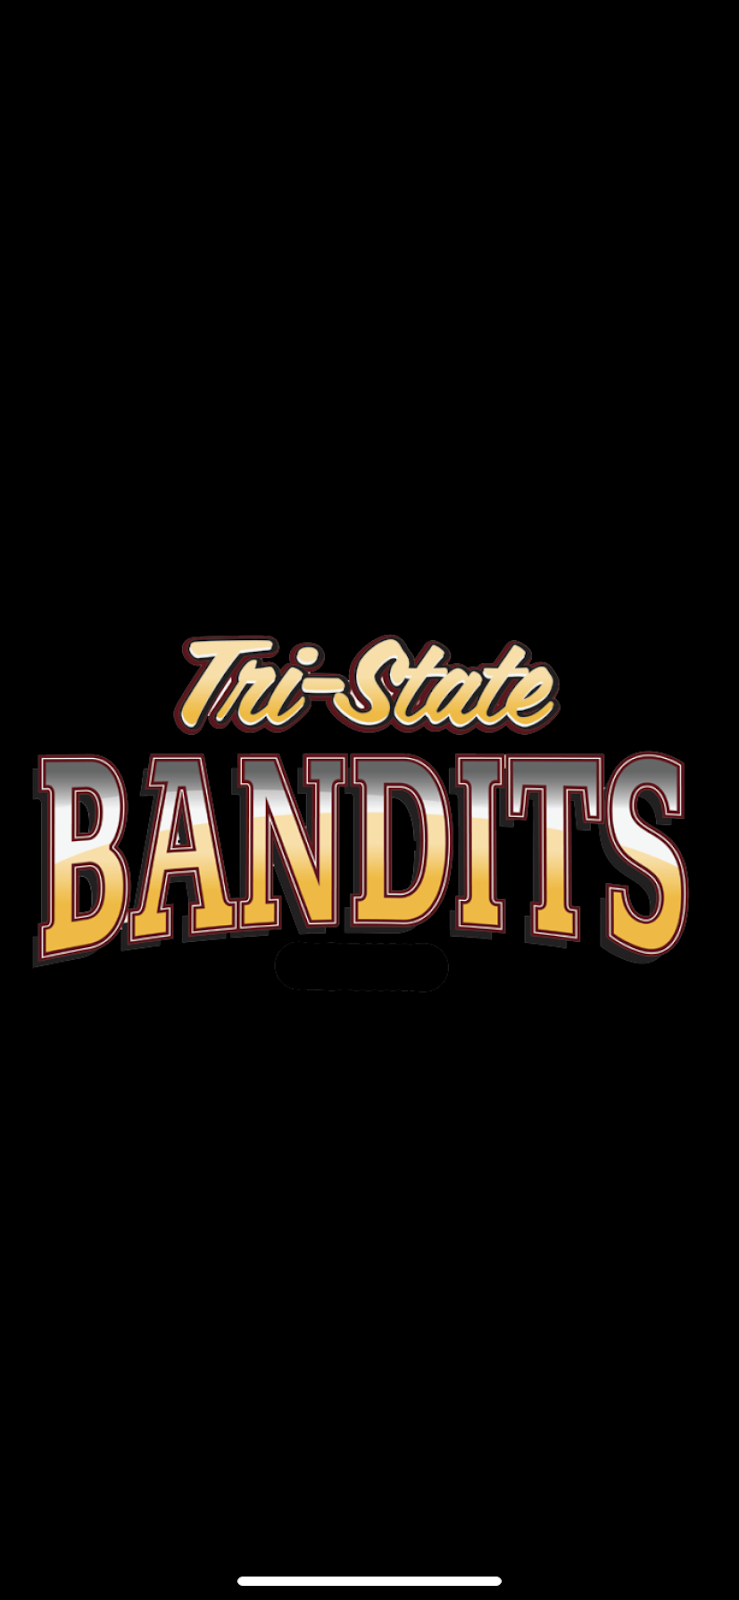 Tri State Bandits Baseball Player Training & Development | 81 Houston Ave Ext, Middletown, NY 10940 | Phone: (845) 978-6816